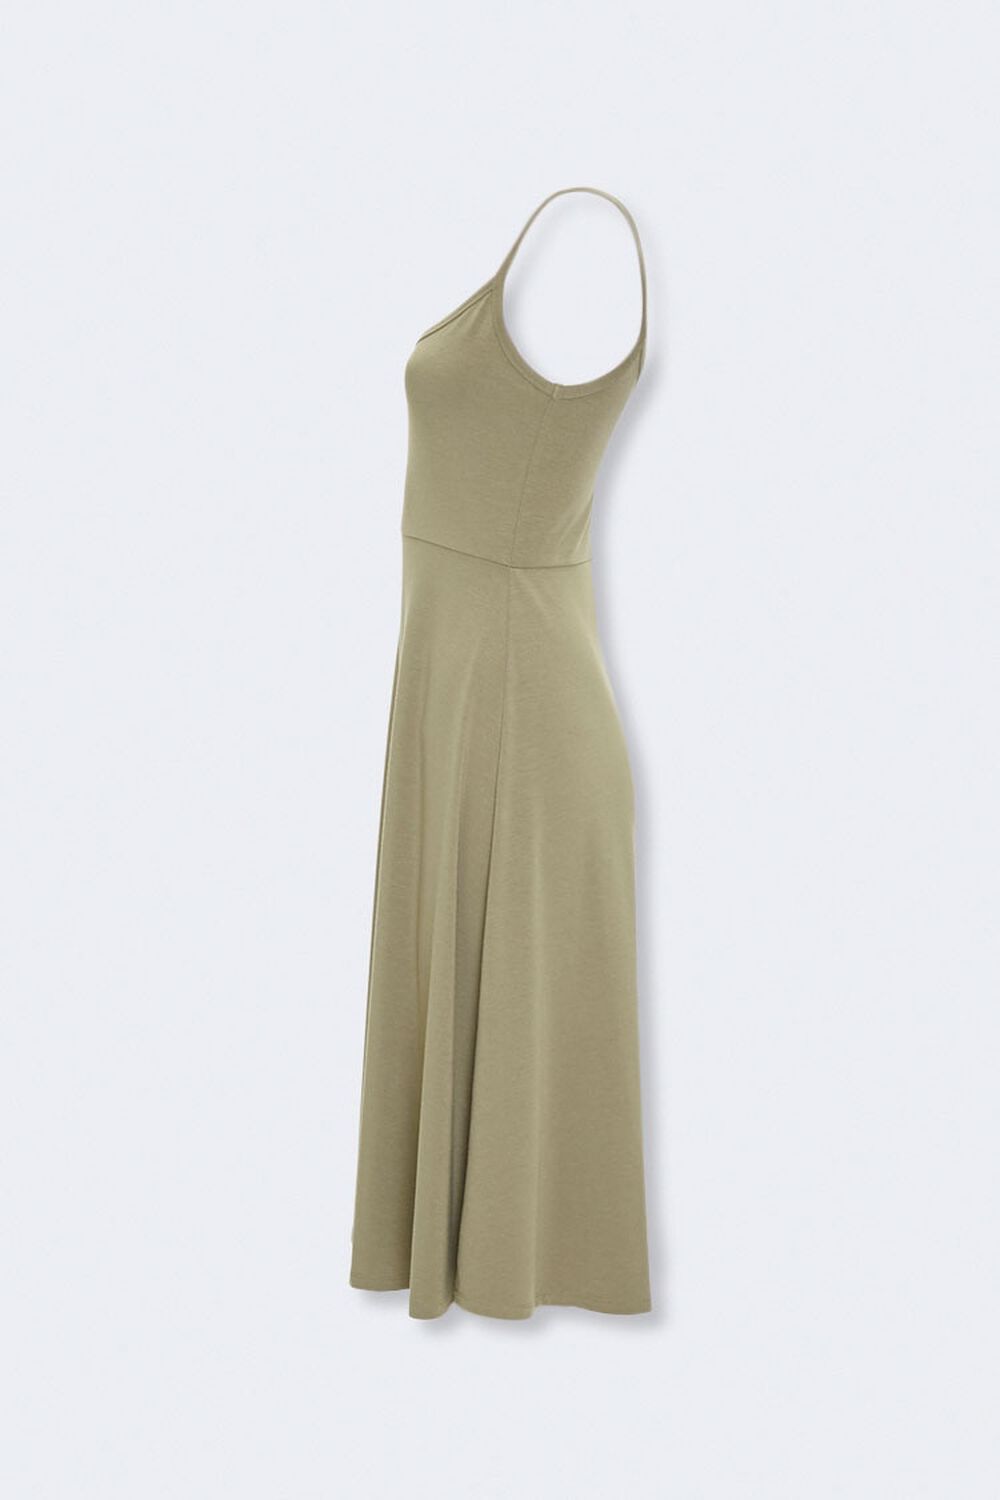 OLIVE Cami Midi Dress, image 2